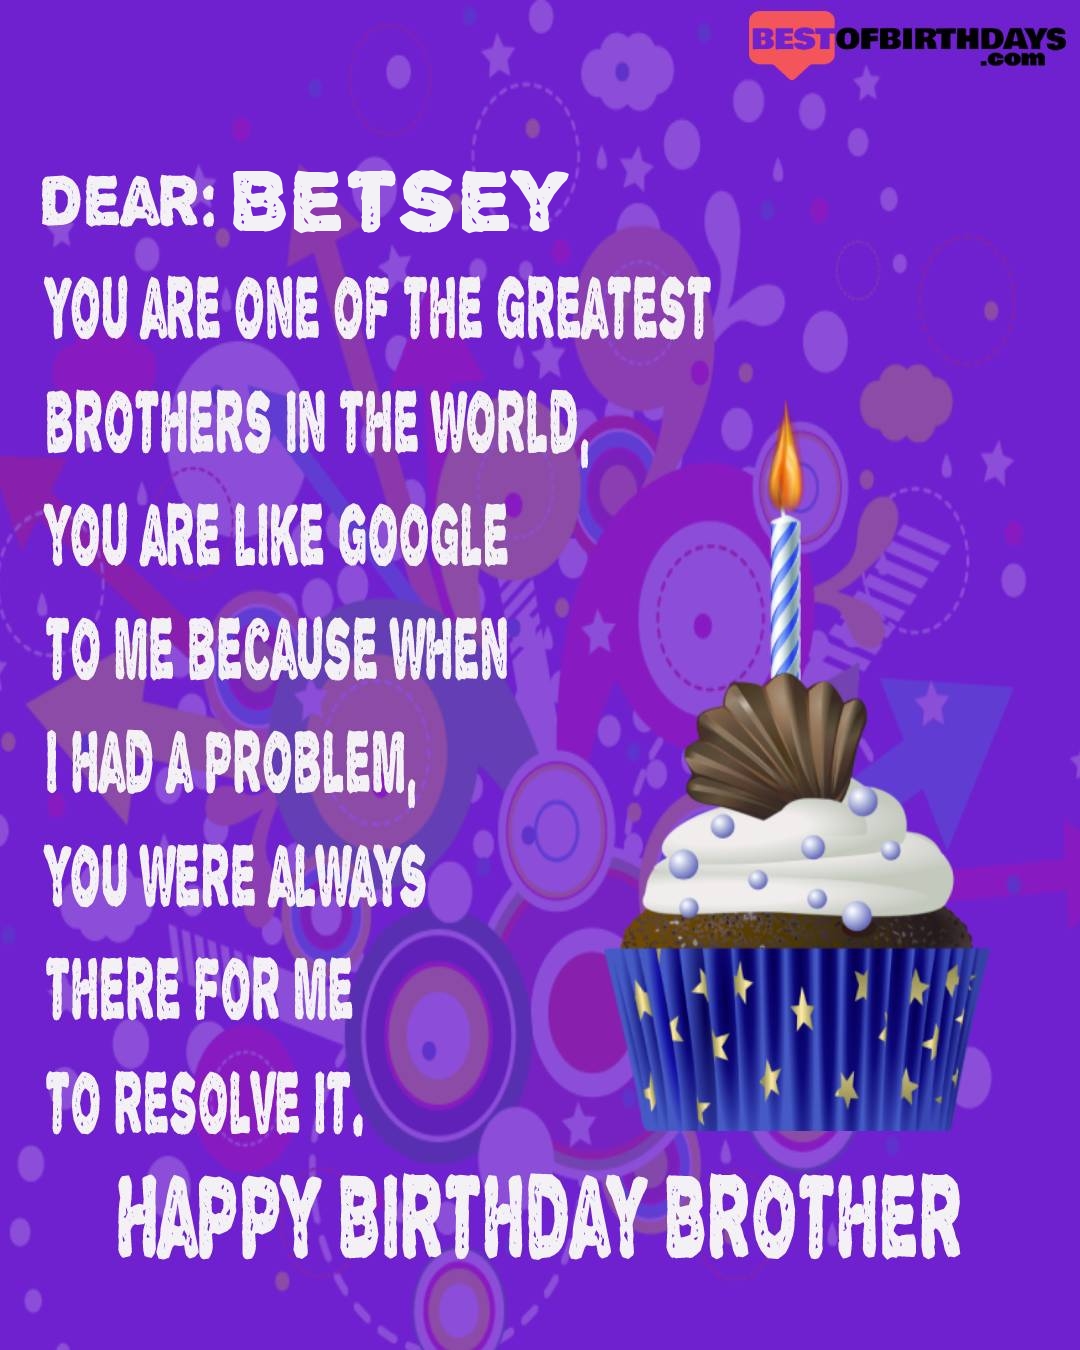 Happy birthday betsey bhai brother bro